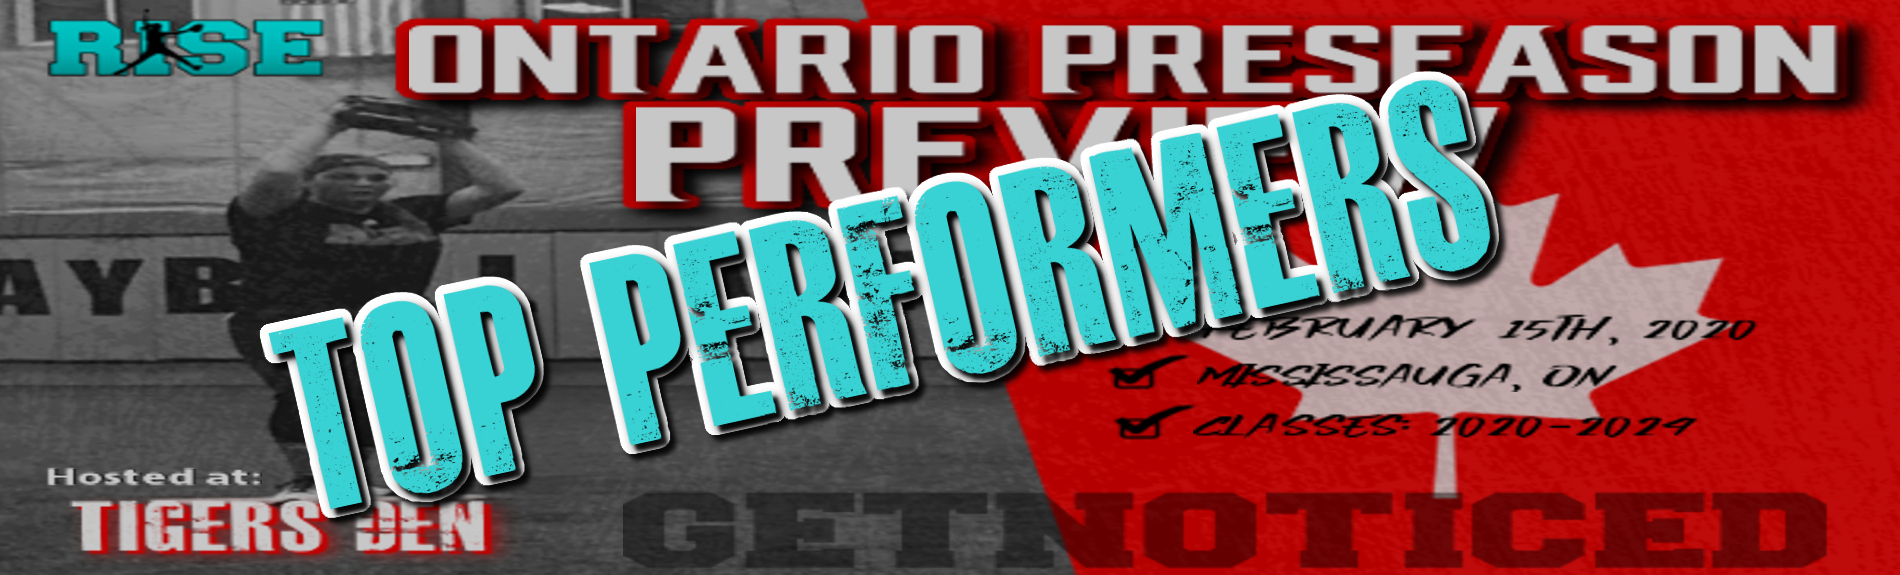 Ontario Preseason Preview “TOP PERFORMERS”